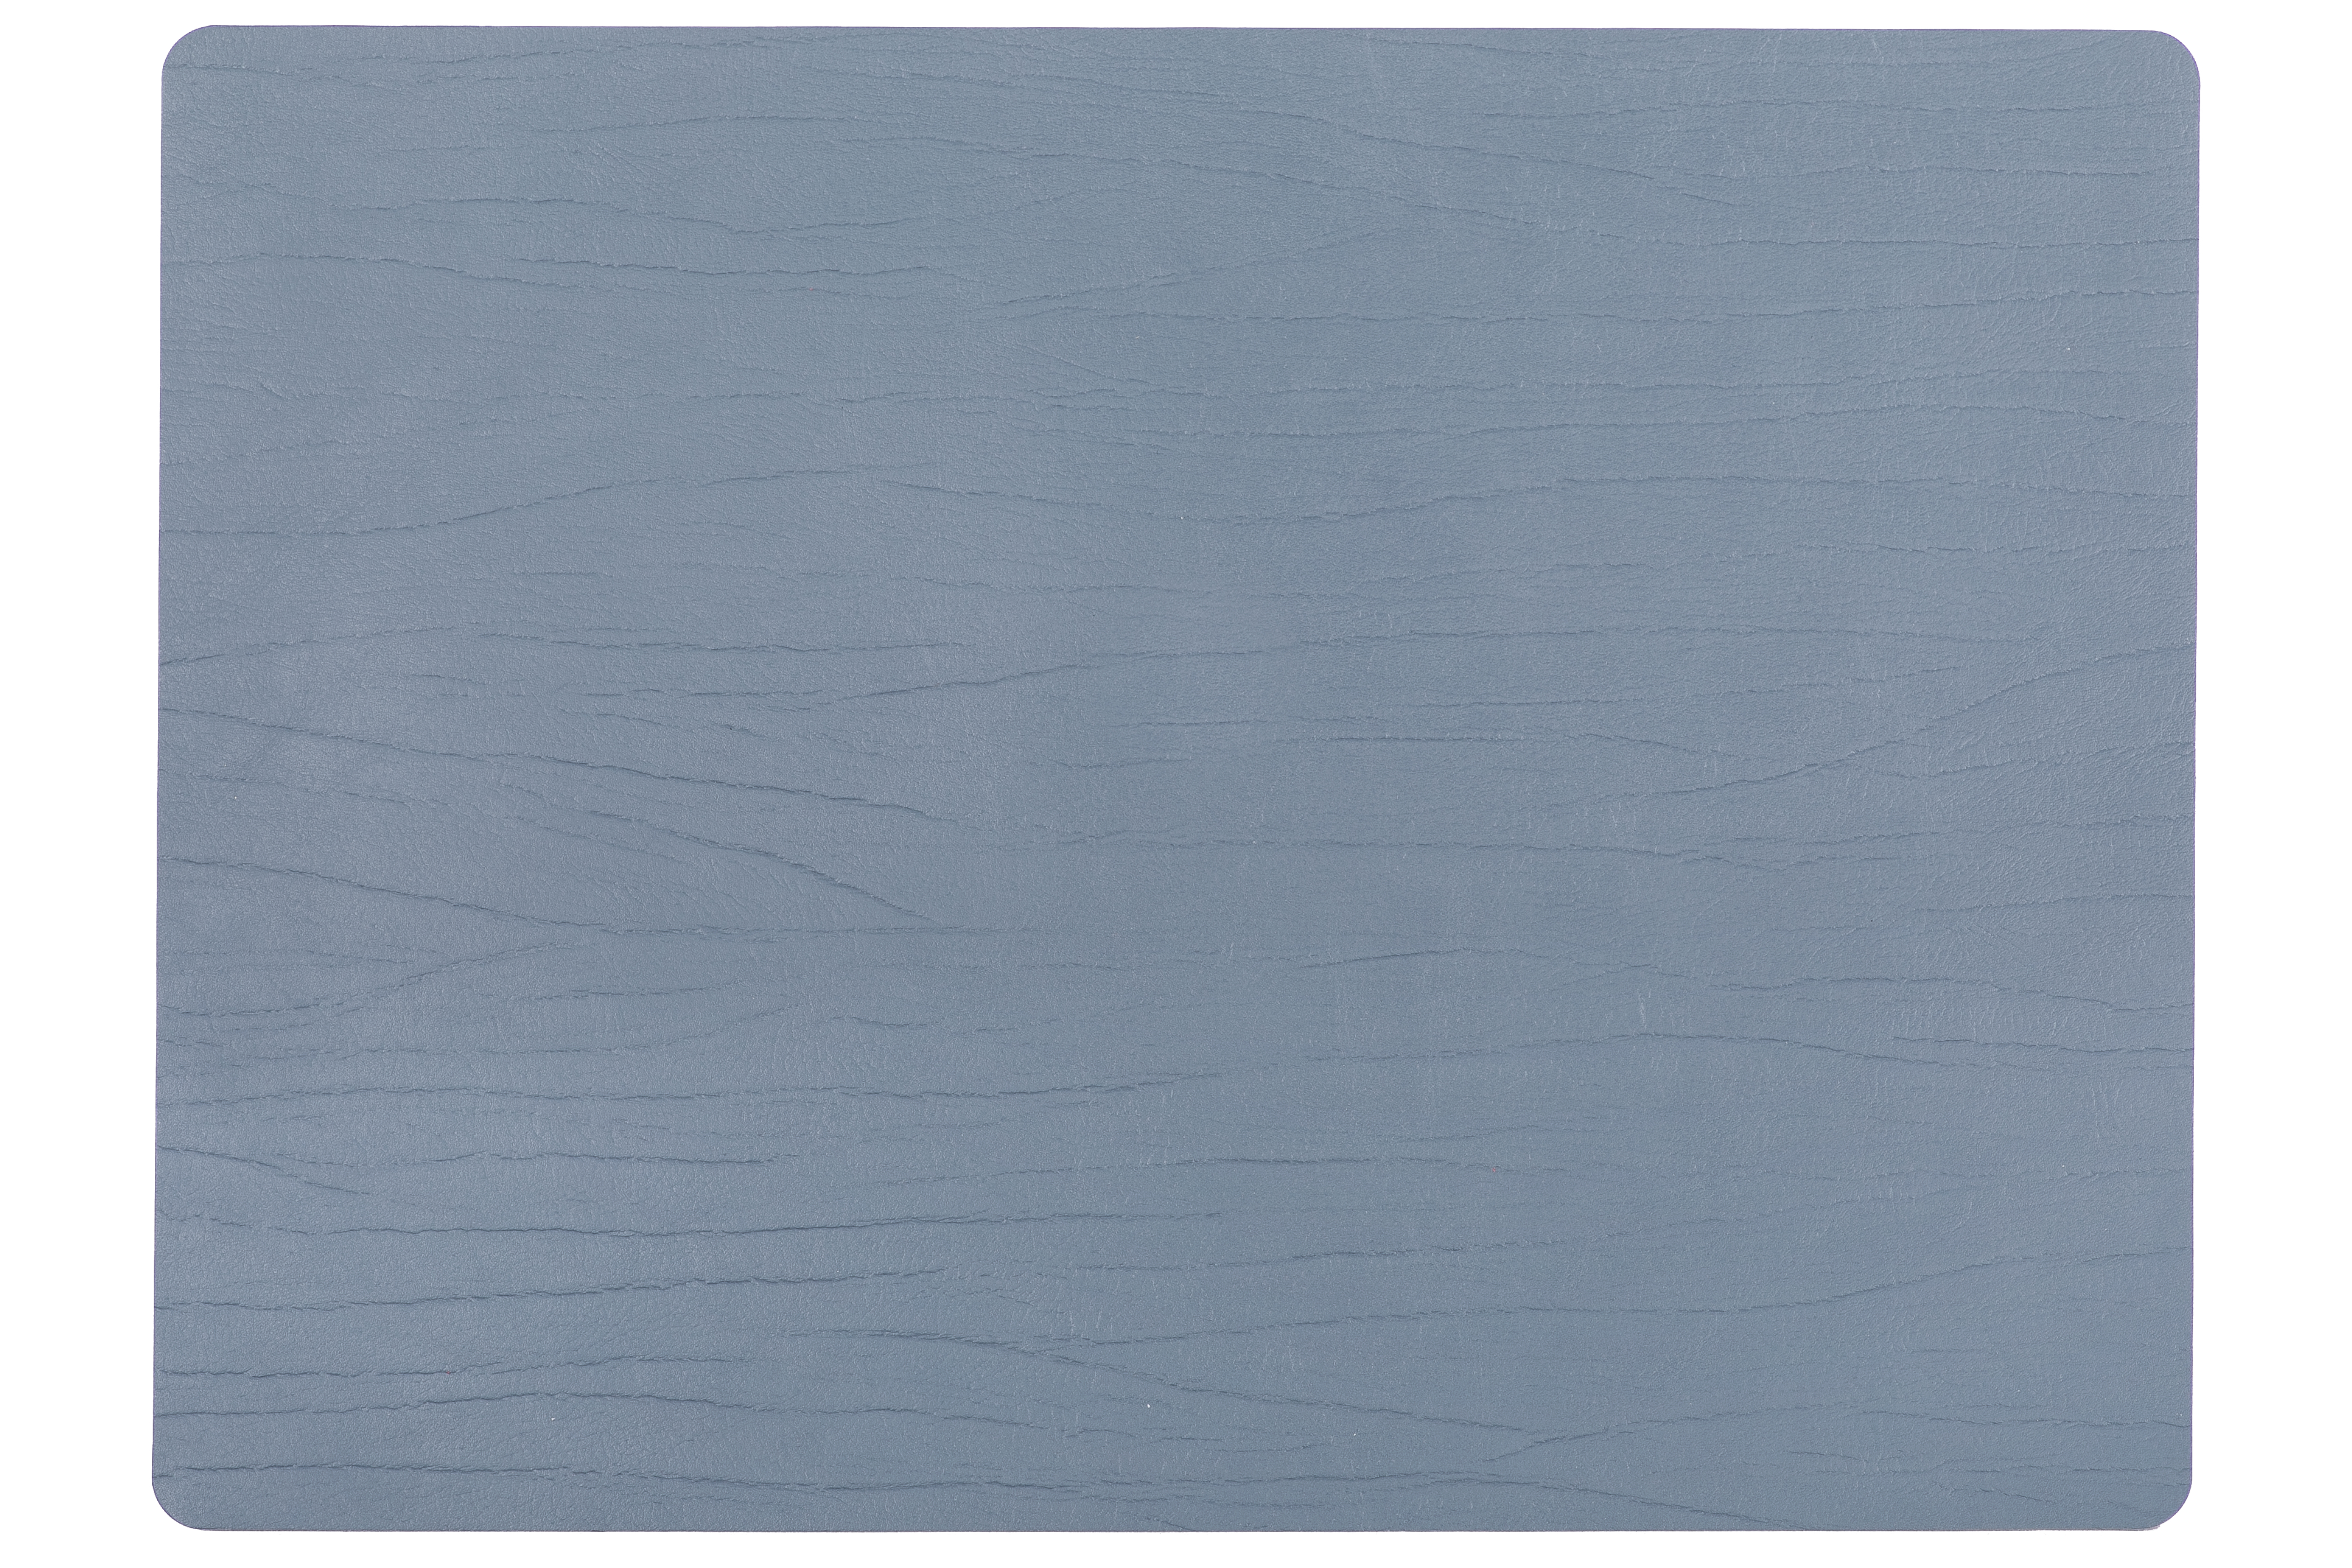 Titan placemat rectangular, 33x45cm, stone blue double sided